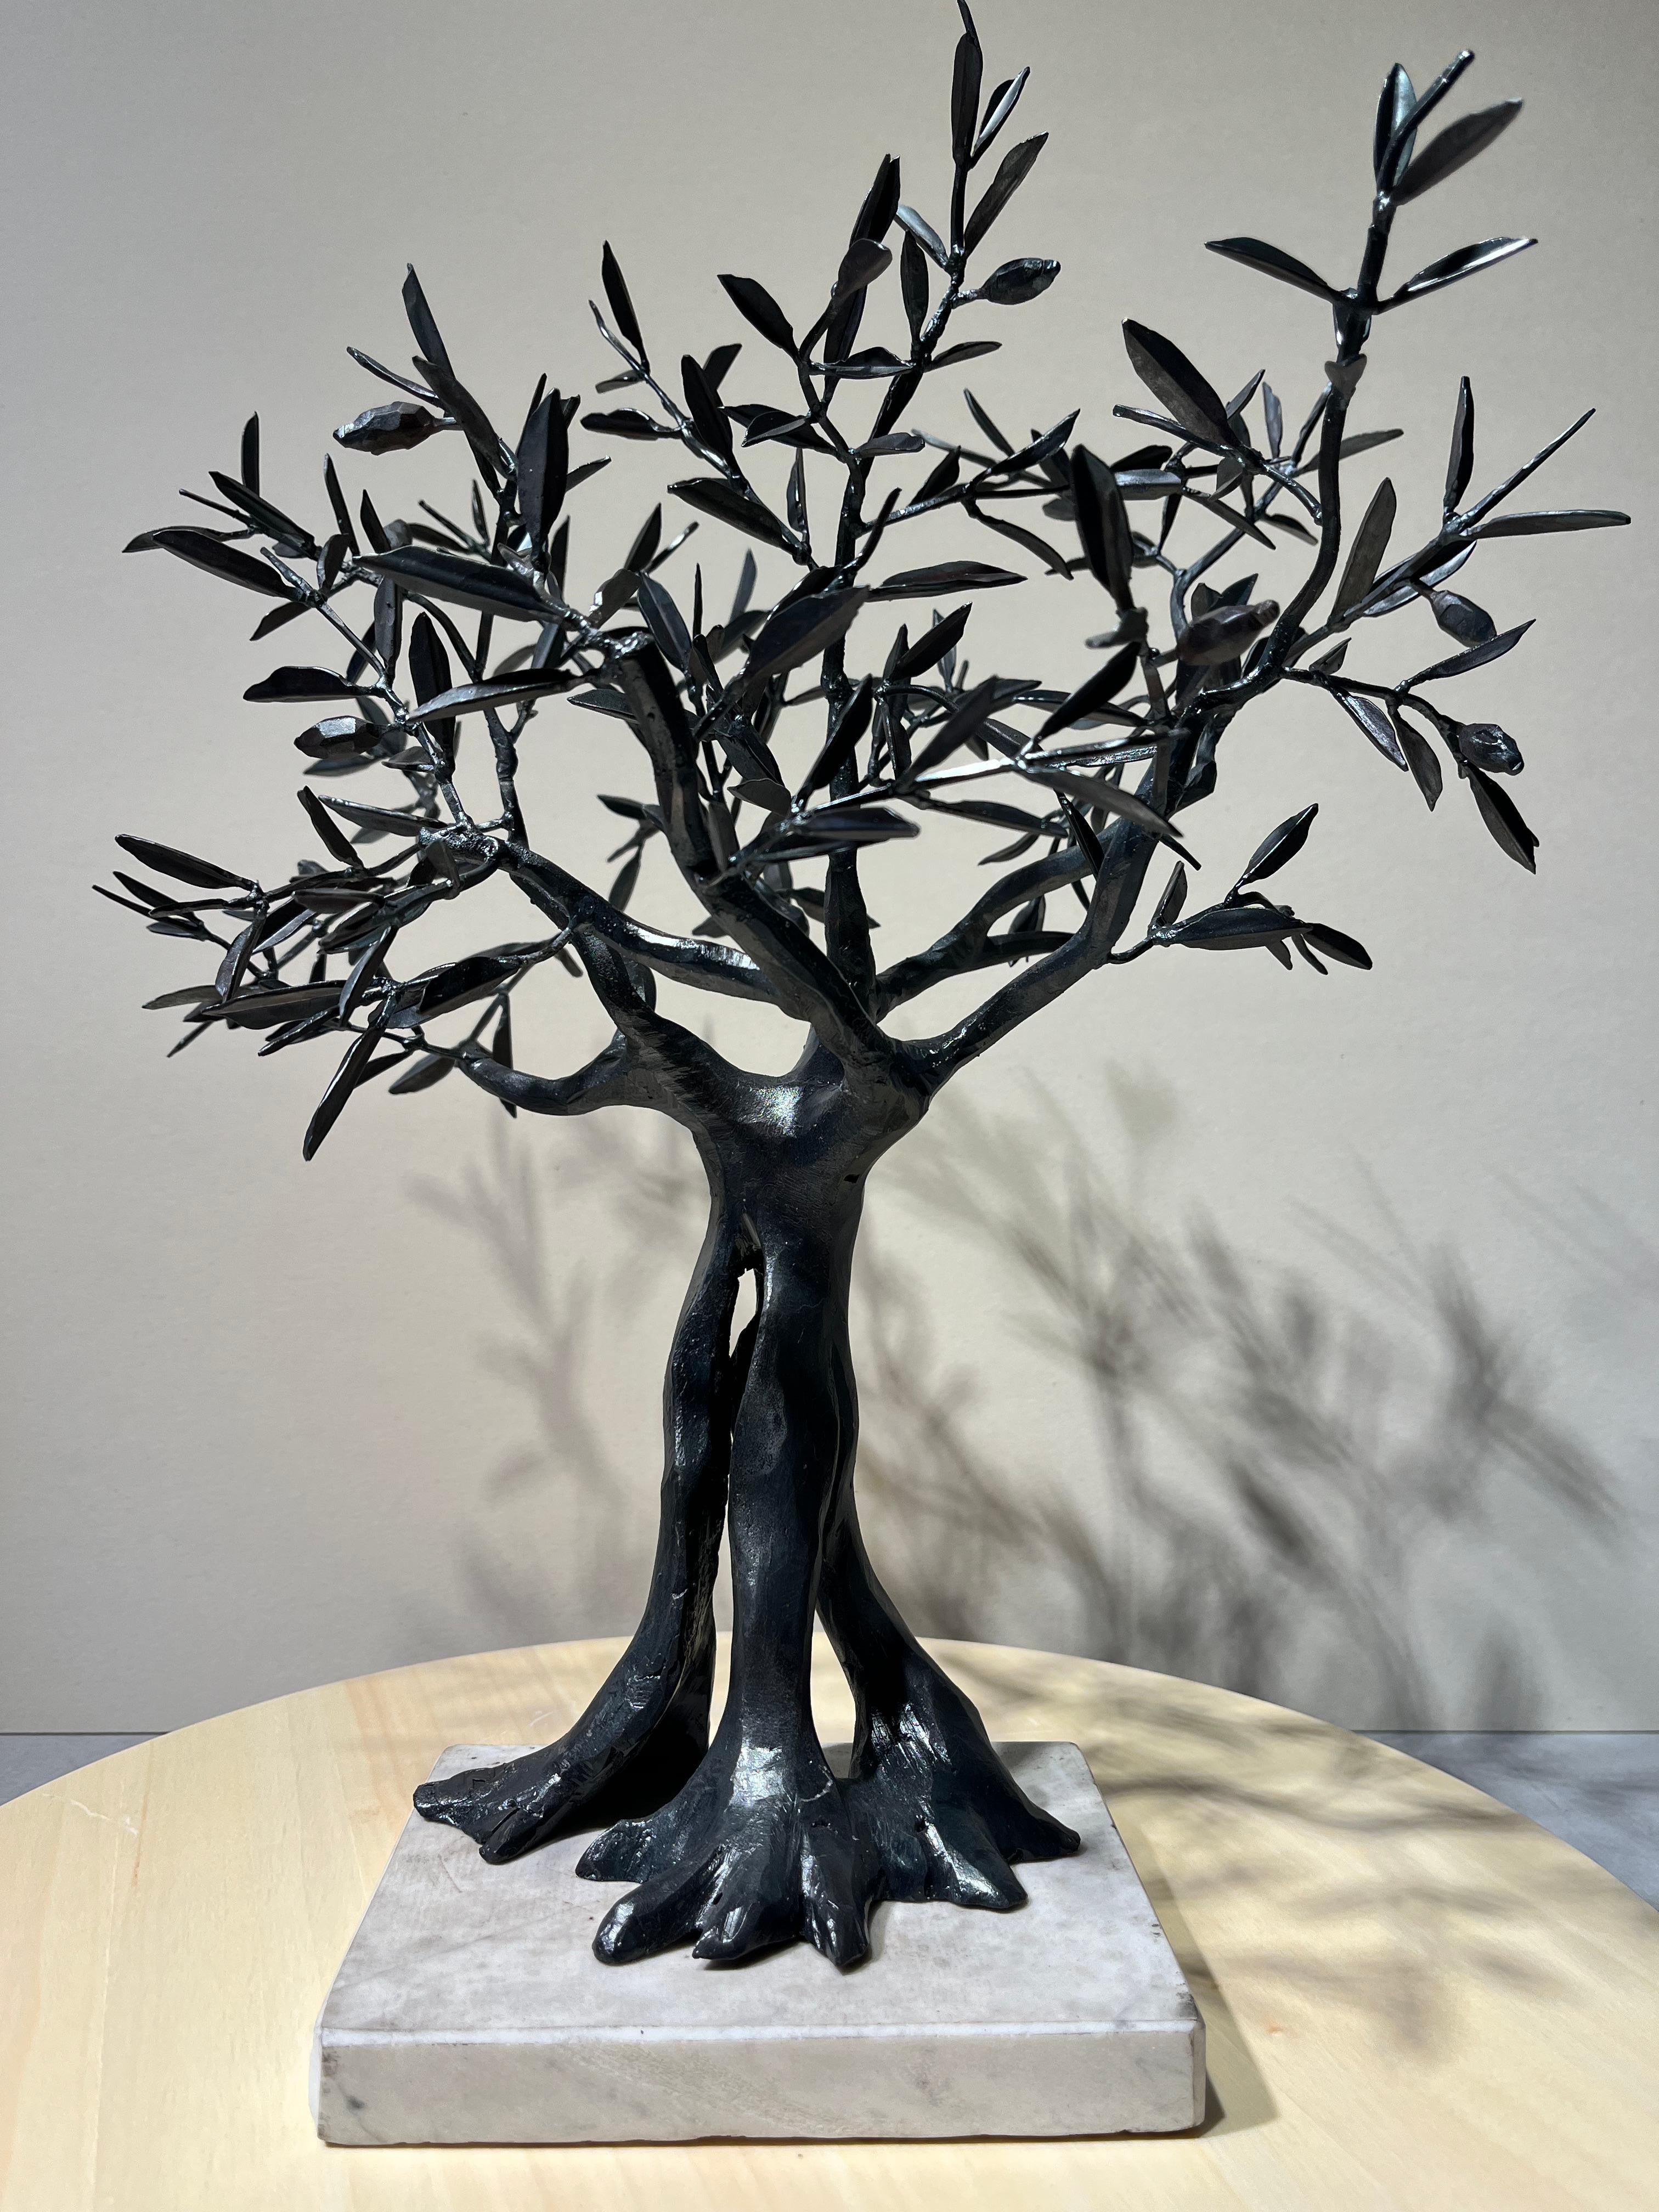 Ivan Zanoni Still-Life Sculpture - Bonsai Ulive tree black wrought iron sculpture by Italian master